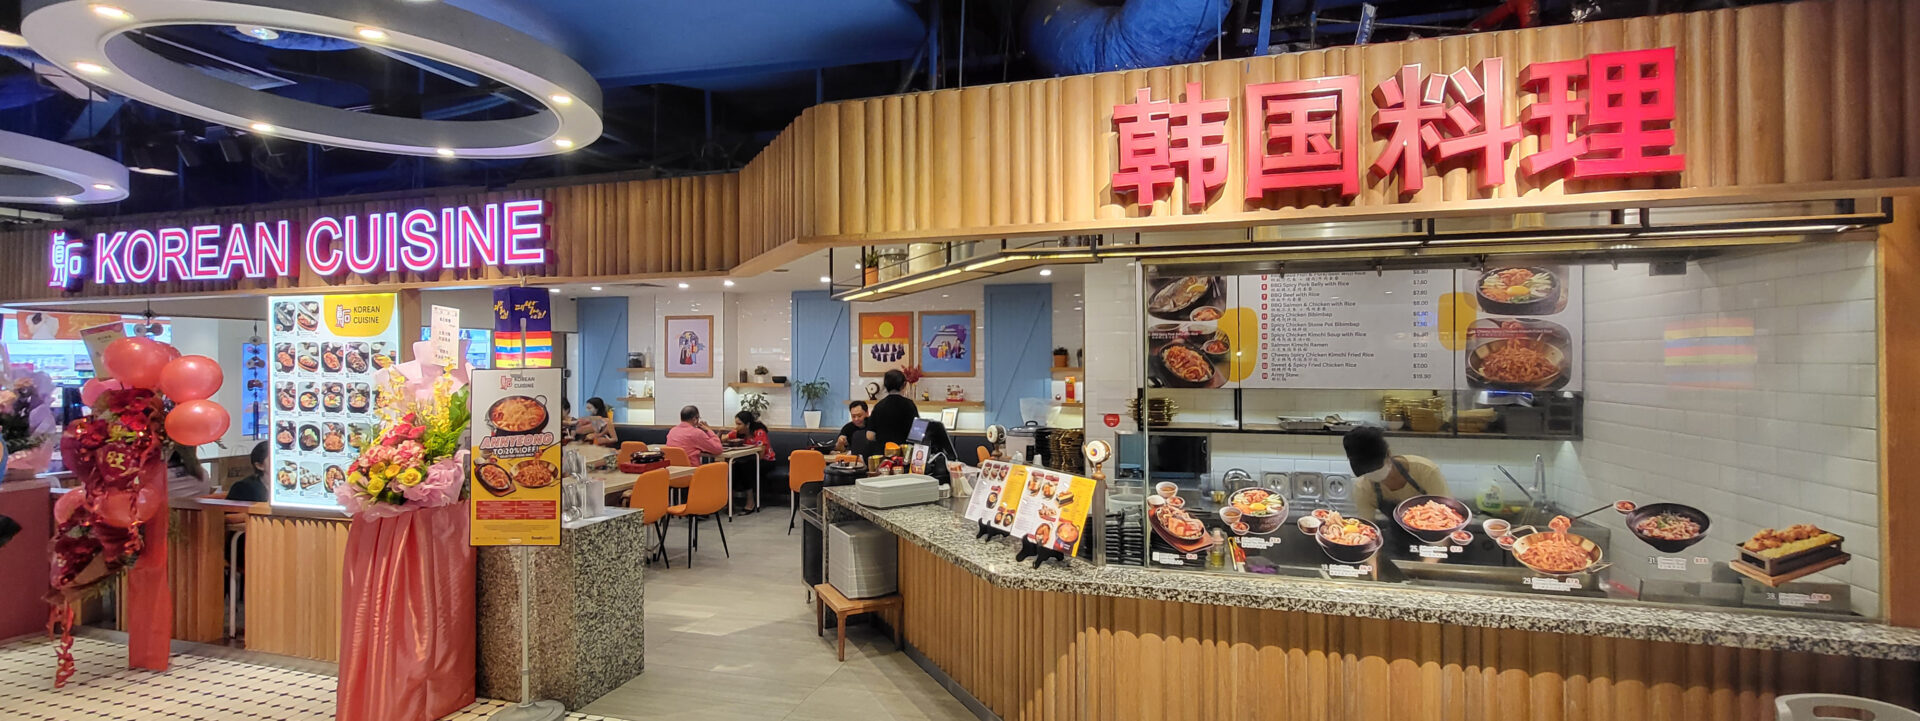 ZhenShi Korean Cuisine Parkway - storefront